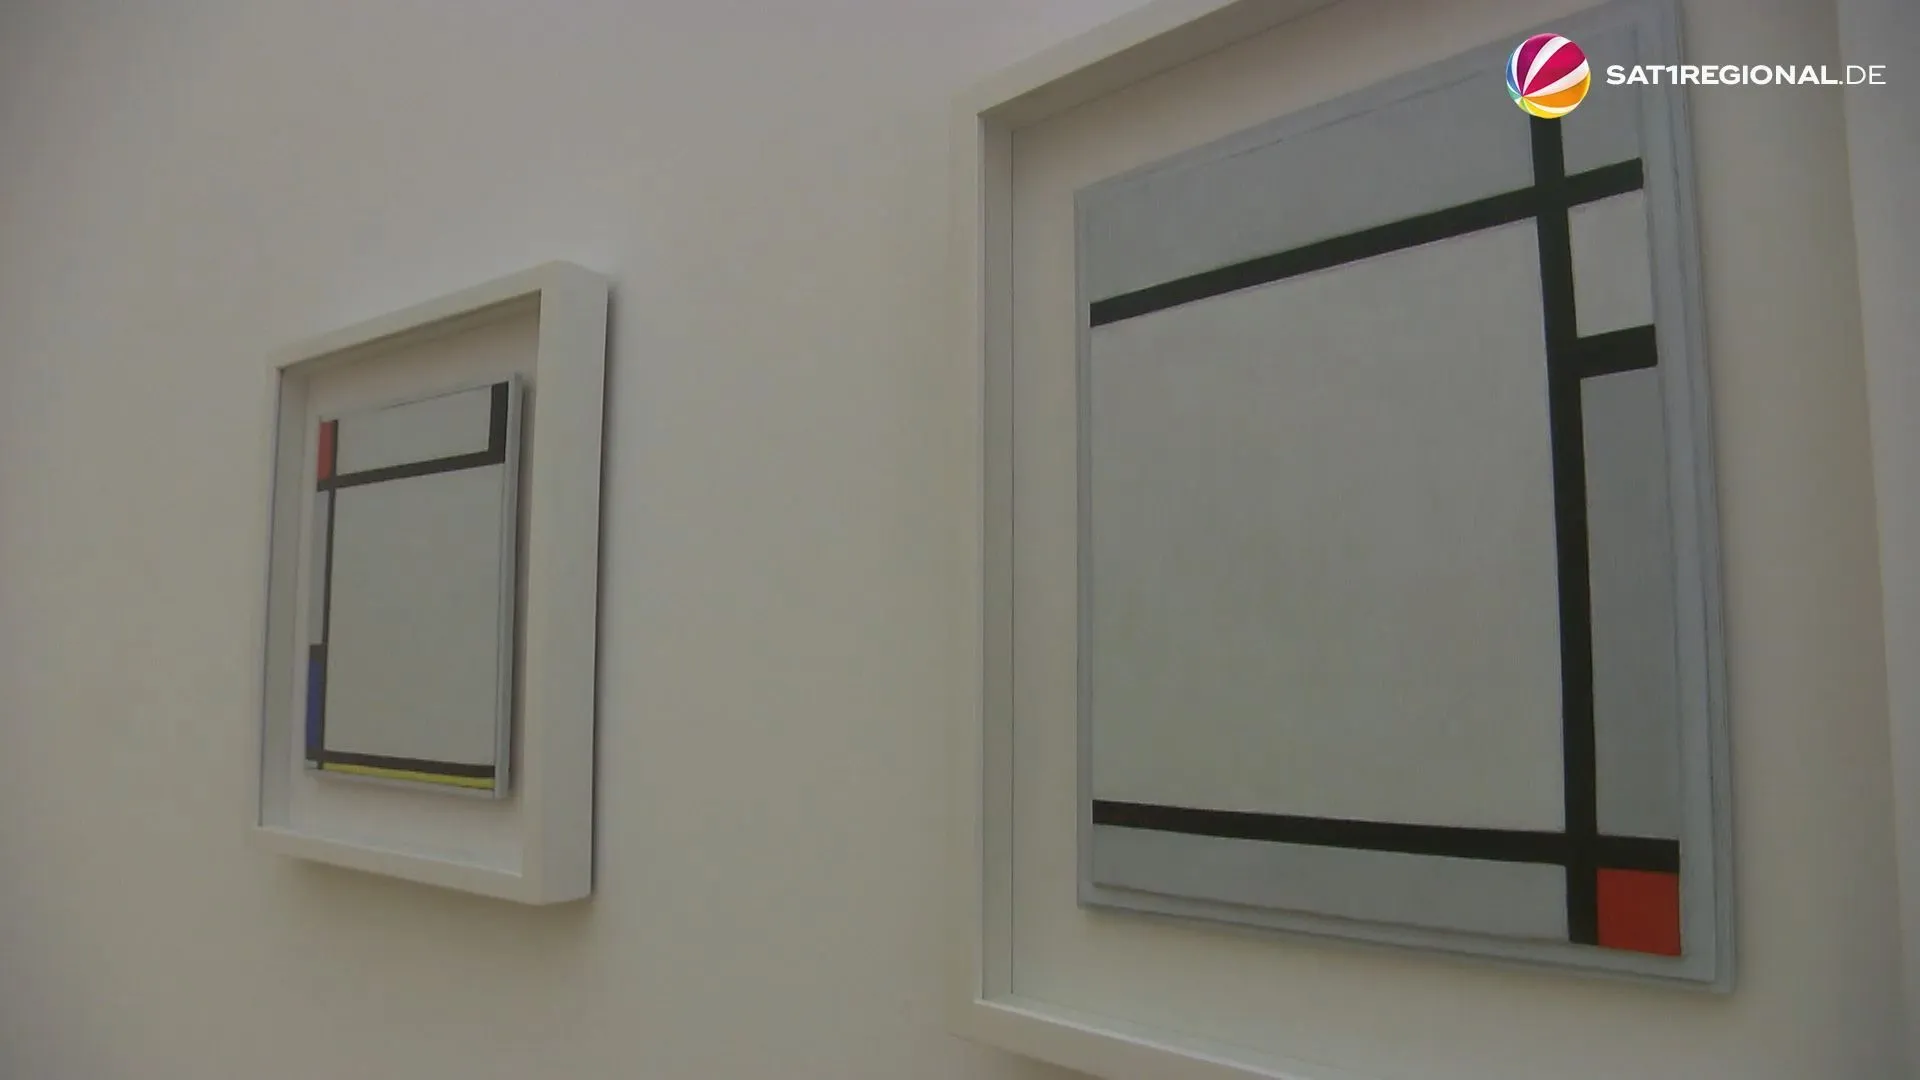 Mondrian exhibition: Art museum shows works by the Dutch artist